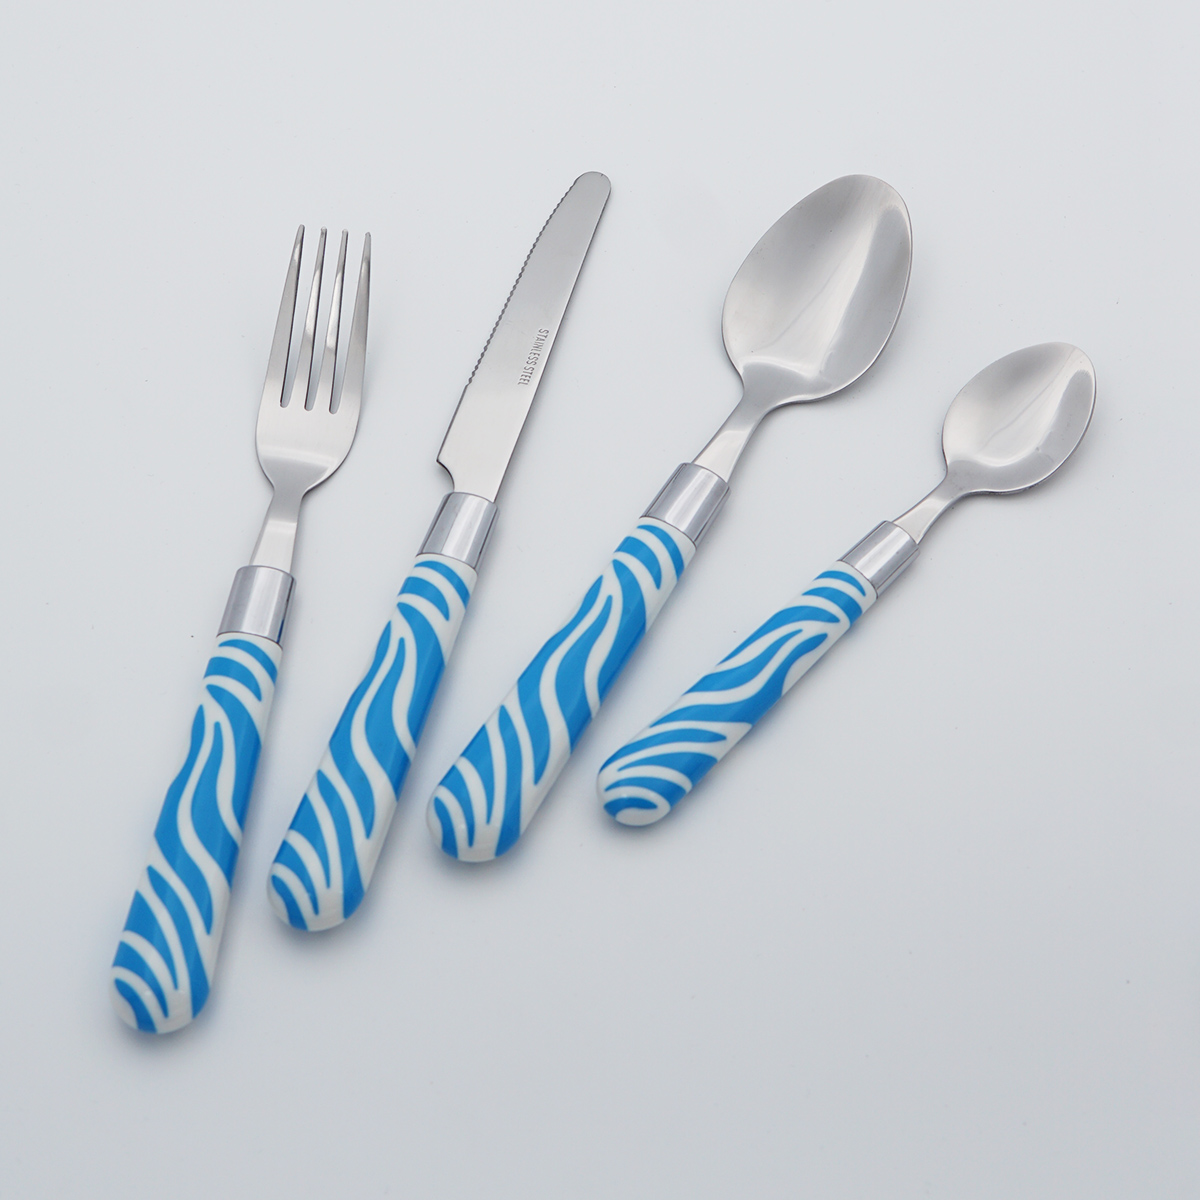 Stainless Steel Cutlery Plastic Handle Wholesale Food Grade Flatware Mirror Polish Silverware Set for Restaurant Hotel